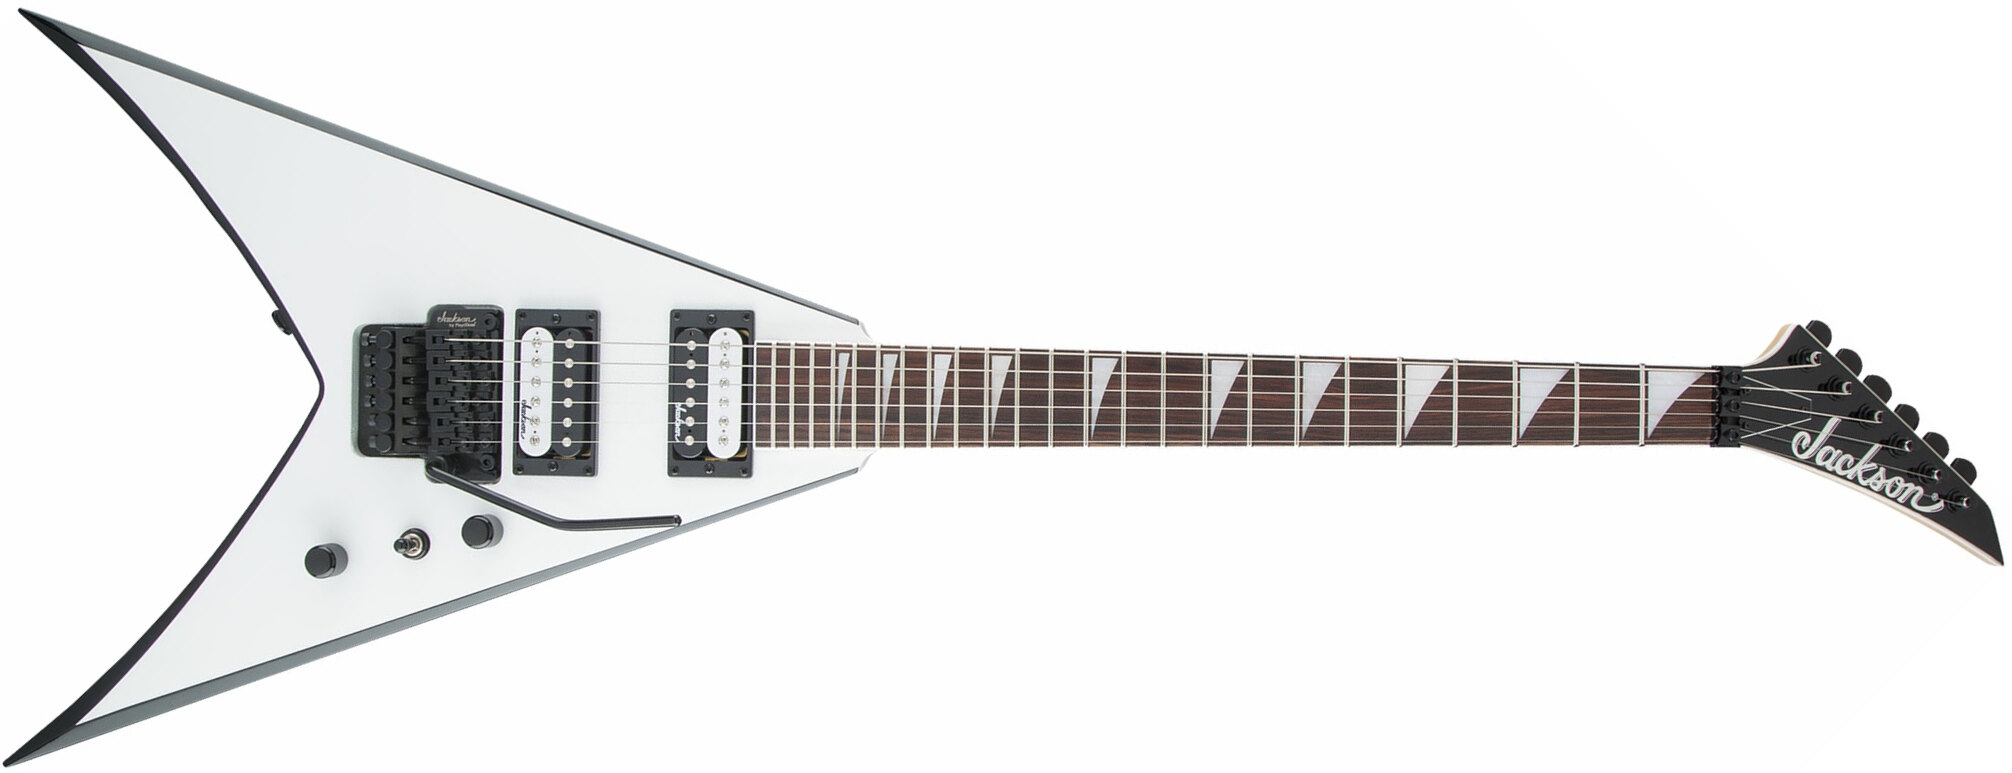 Jackson King V Js32 2h Fr Ama - White Black Bevels - Metal electric guitar - Main picture